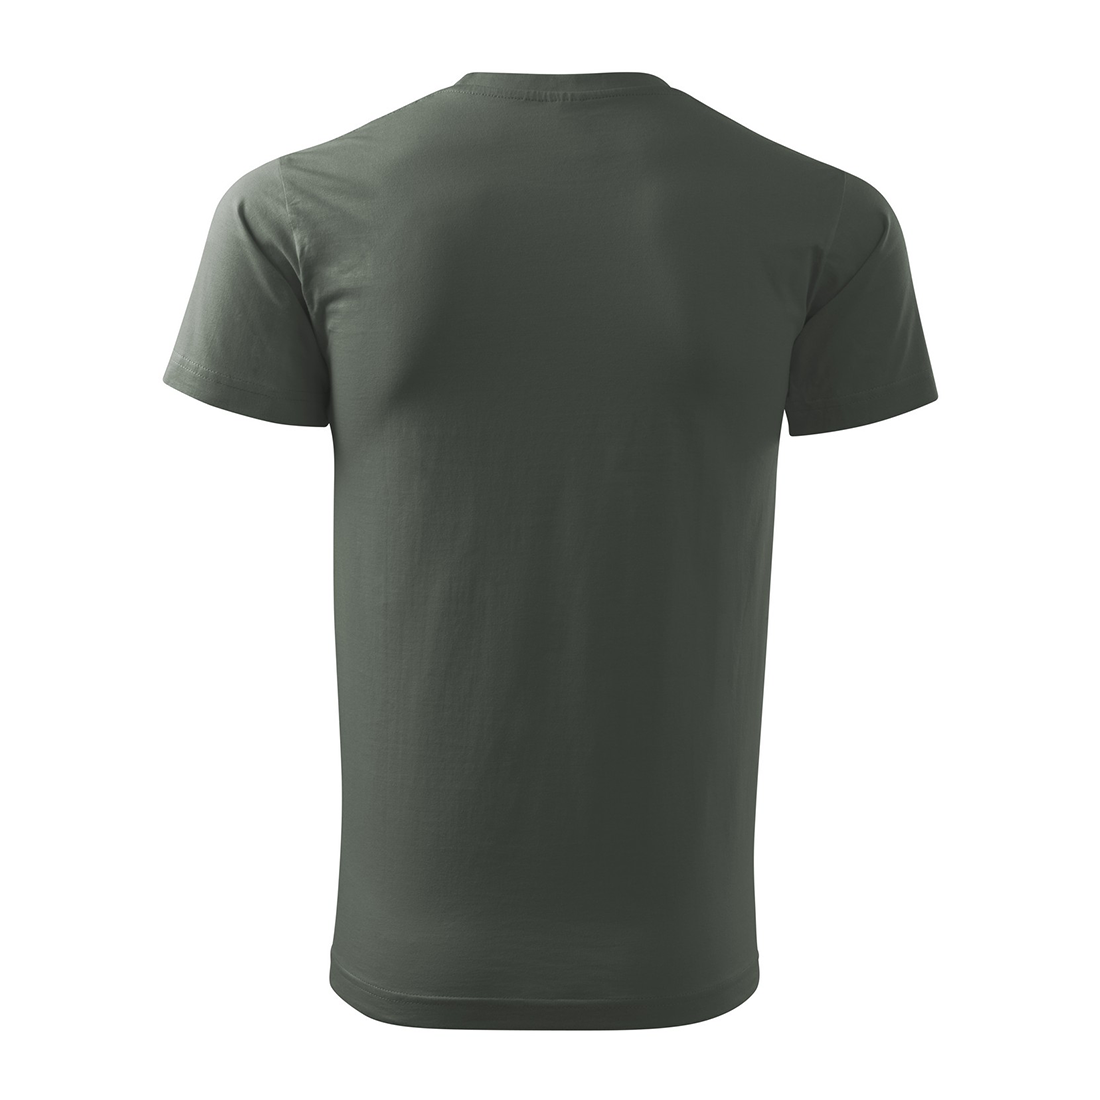 Herren-T-Shirt BASIC - Arbeitskleidung